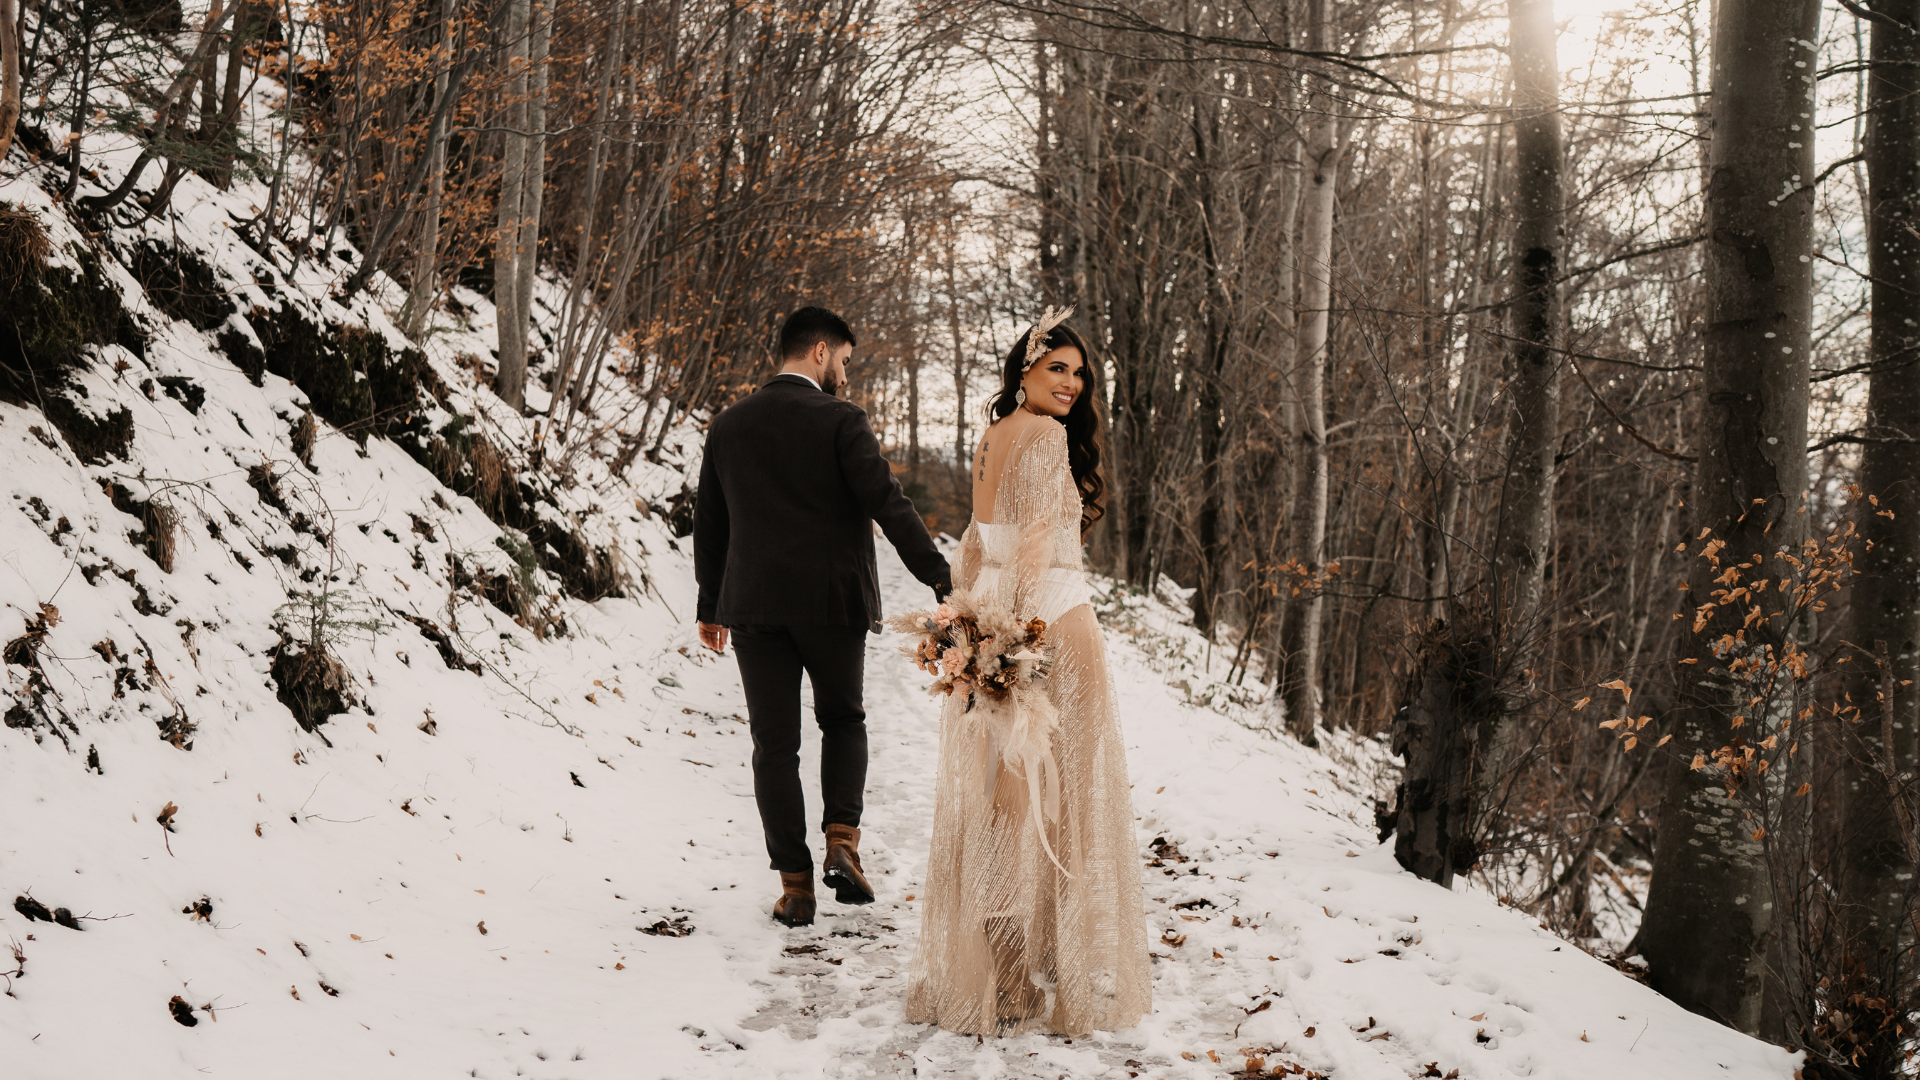 Wedding couple walking on snow path in winter